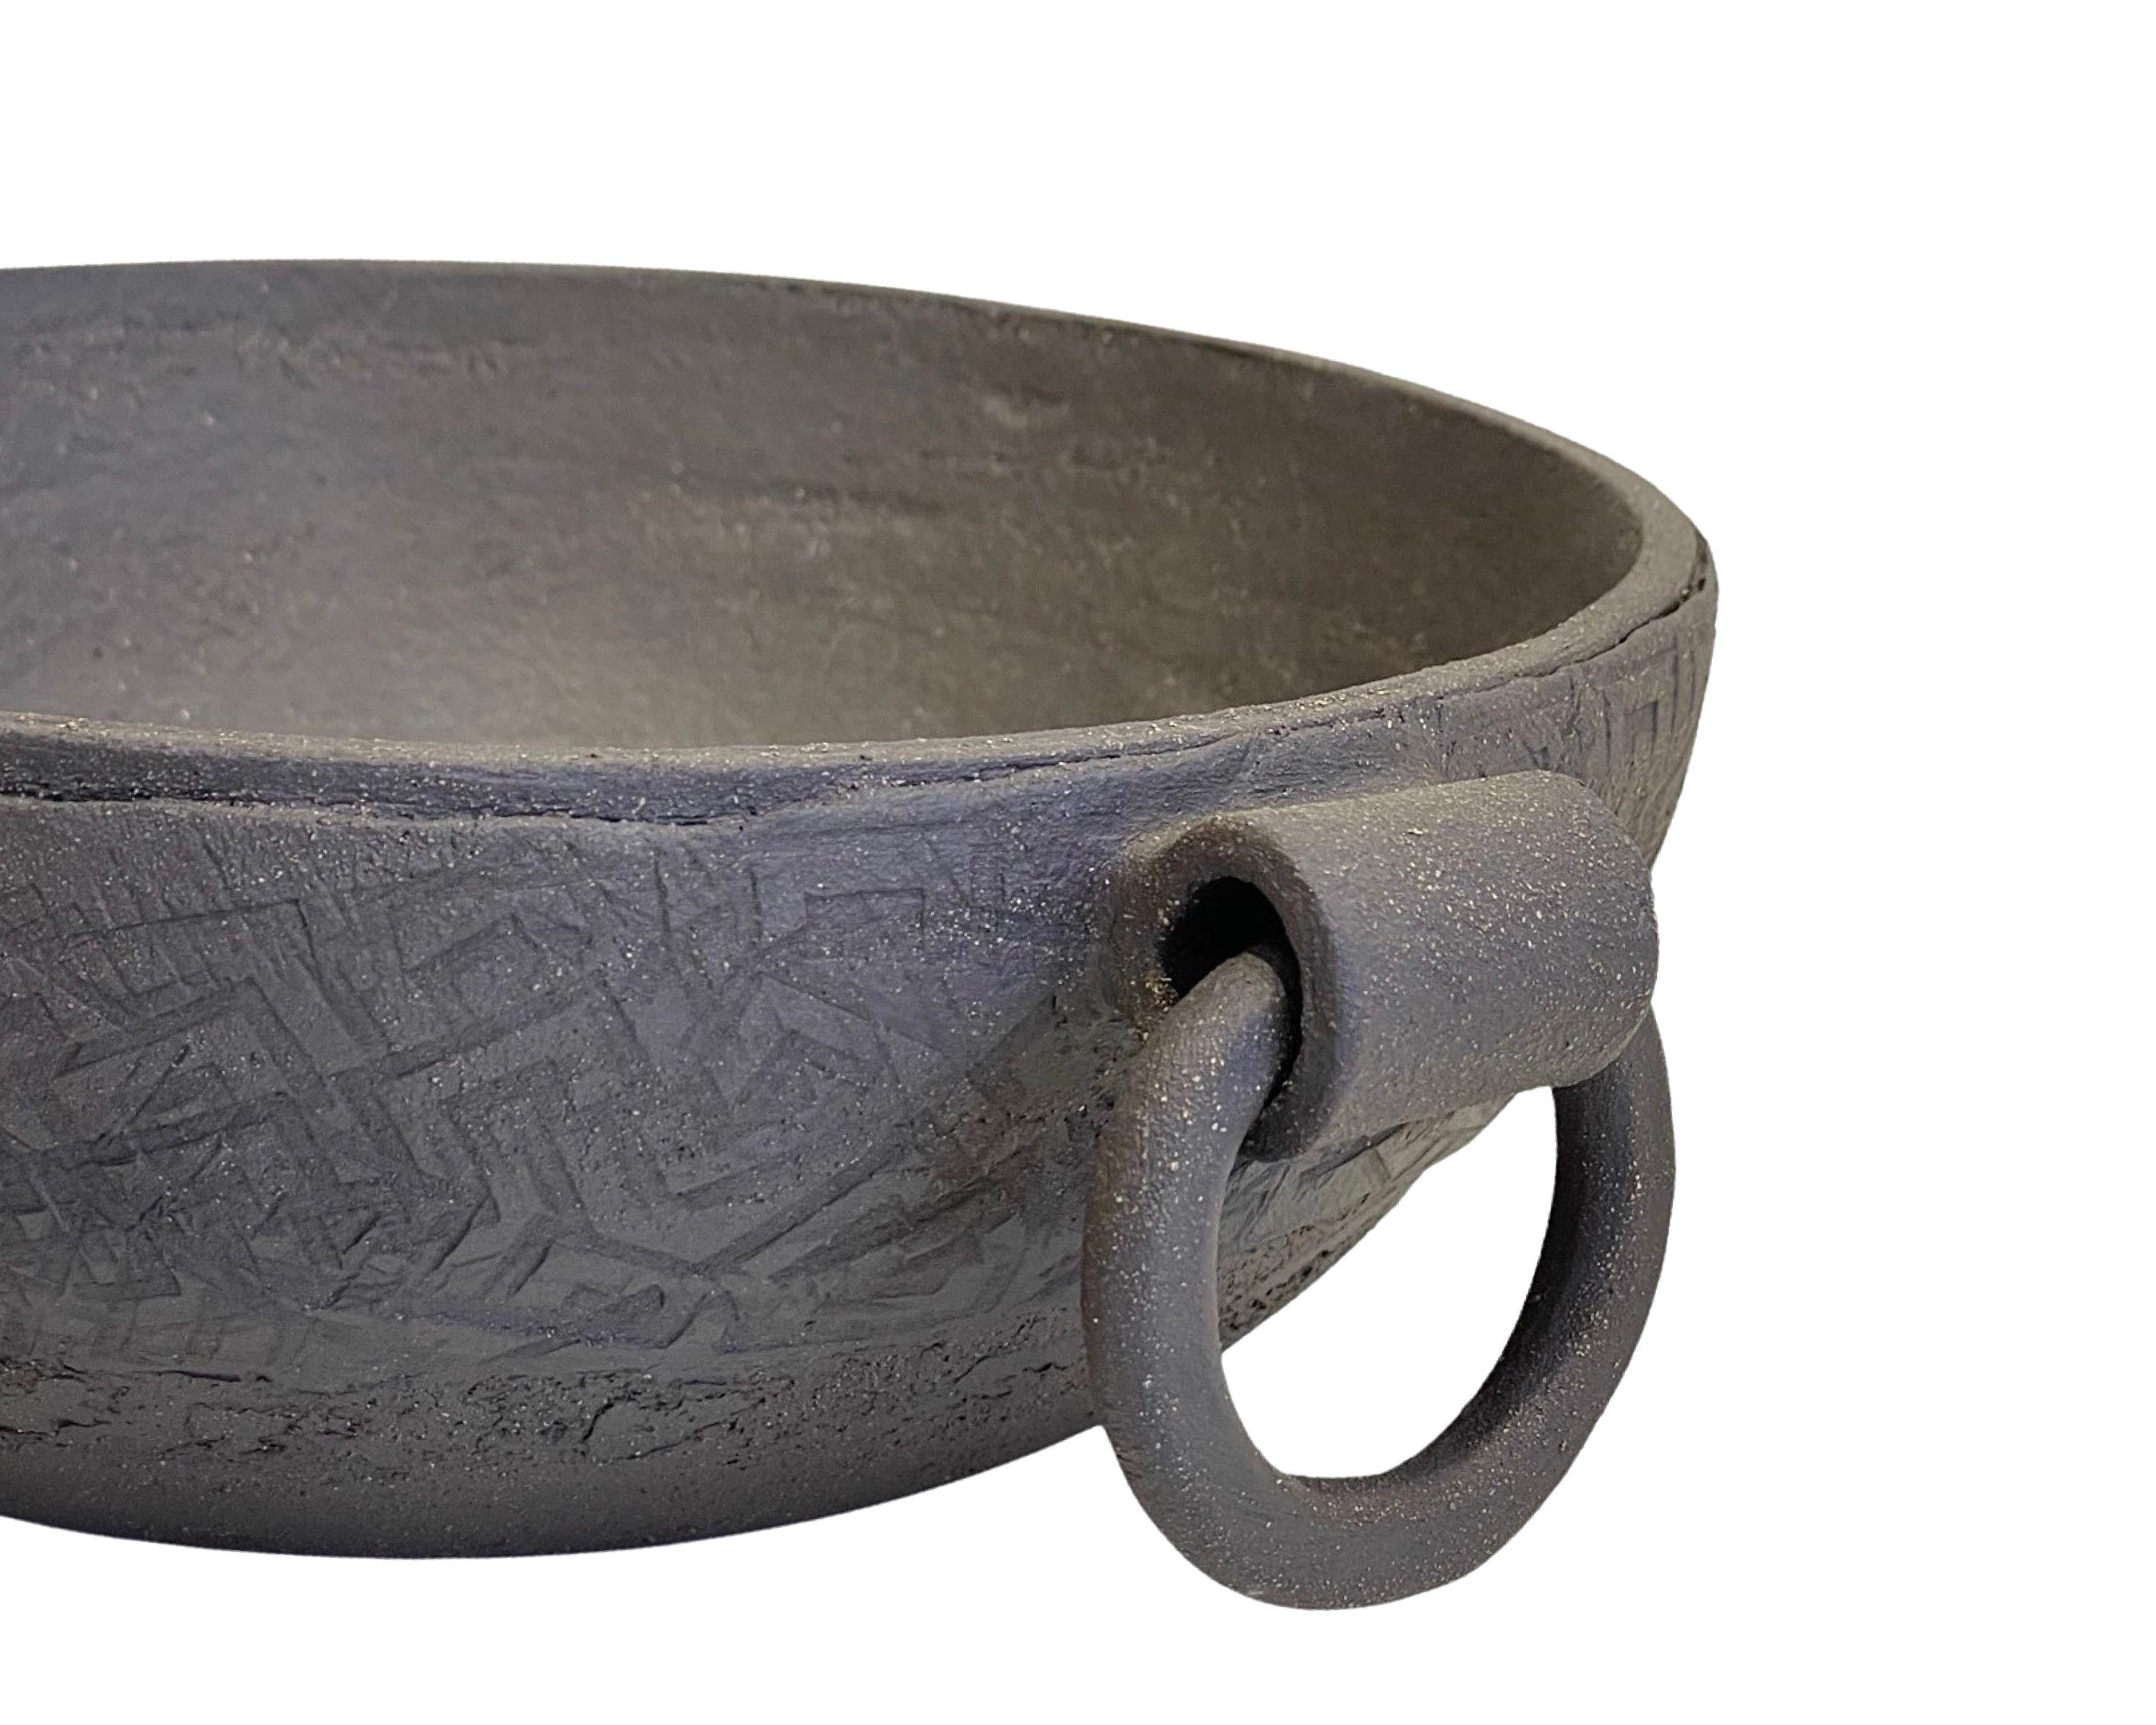 Fired Artisanal Ceramic Centerpiece, Handcrafted Decorative Bowl, Dark Brown For Sale